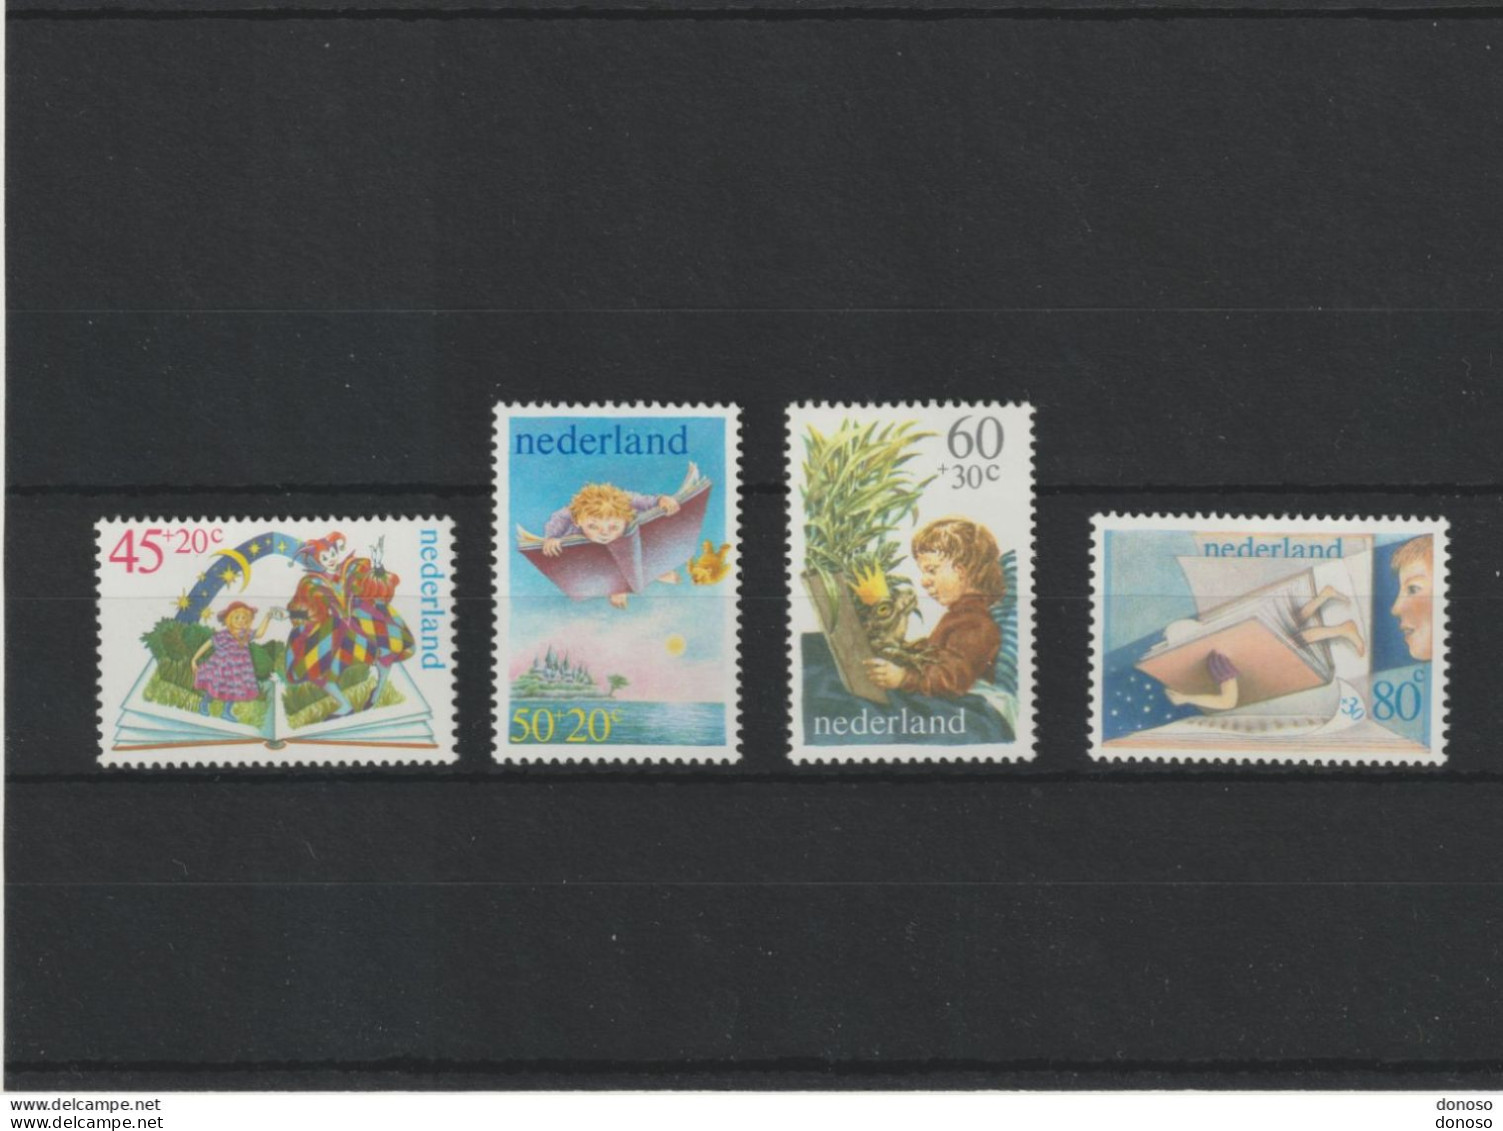 PAYS BAS 1980 ENFANCE Yvert 1141-1144, Michel 1171-1174 NEUF** MNH Cote 4 Euros - Unused Stamps